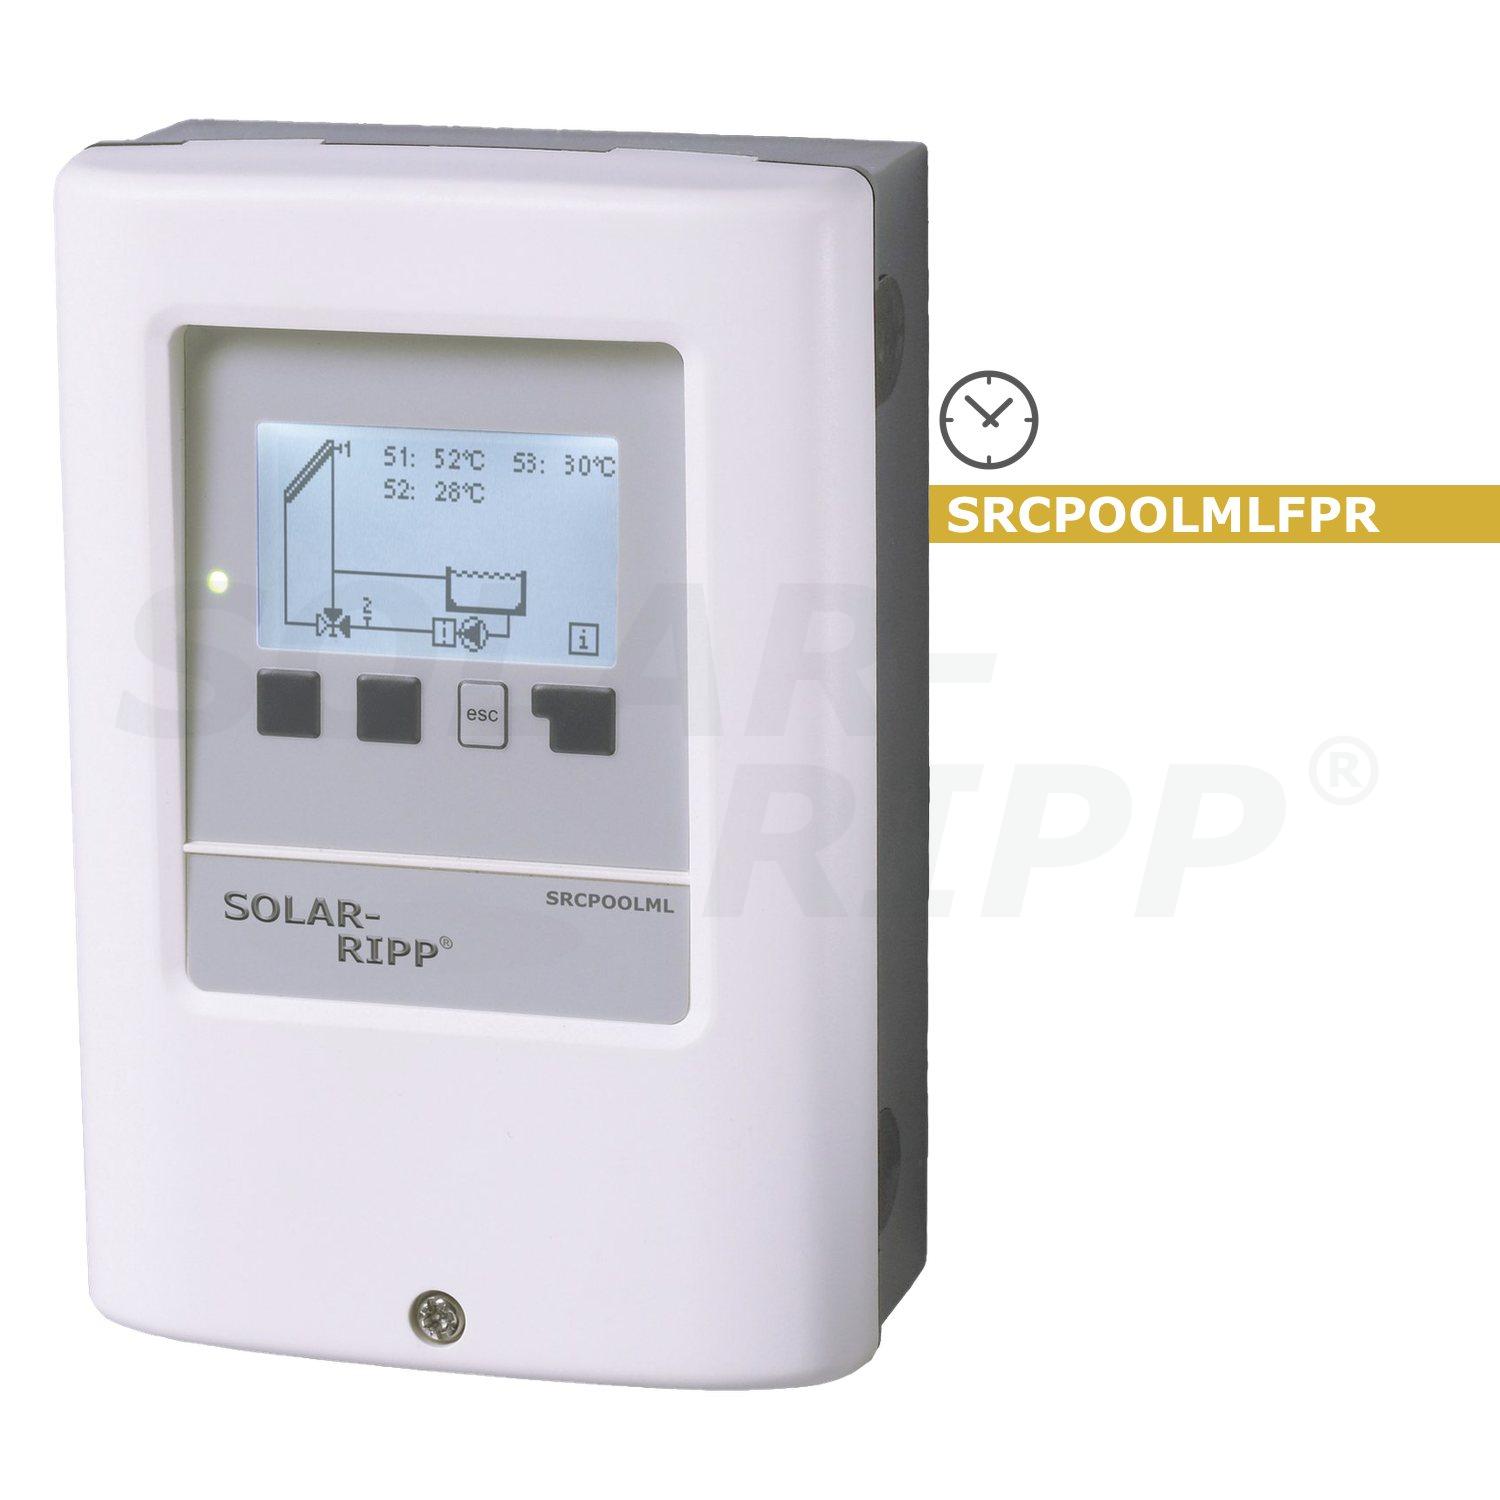 SOLAR-RIPP ® controlador solar SRCPOOLMLFPR